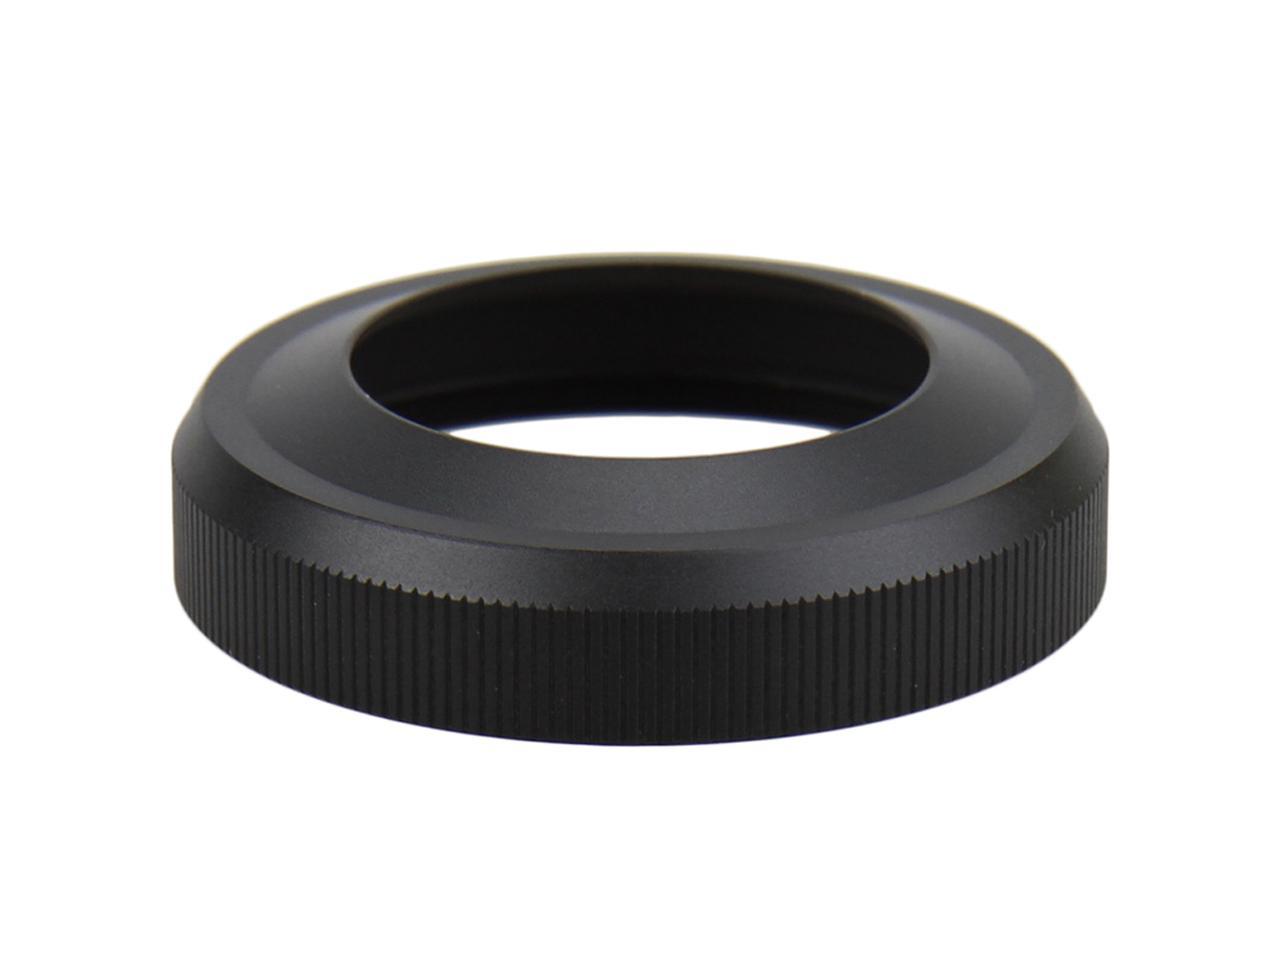 JJC LH-JX100II BLACK Upgrade Lens Hood Shade Adapter Ring for Fujifilm FinePix X100 X100S Replaces AR-X100 Black